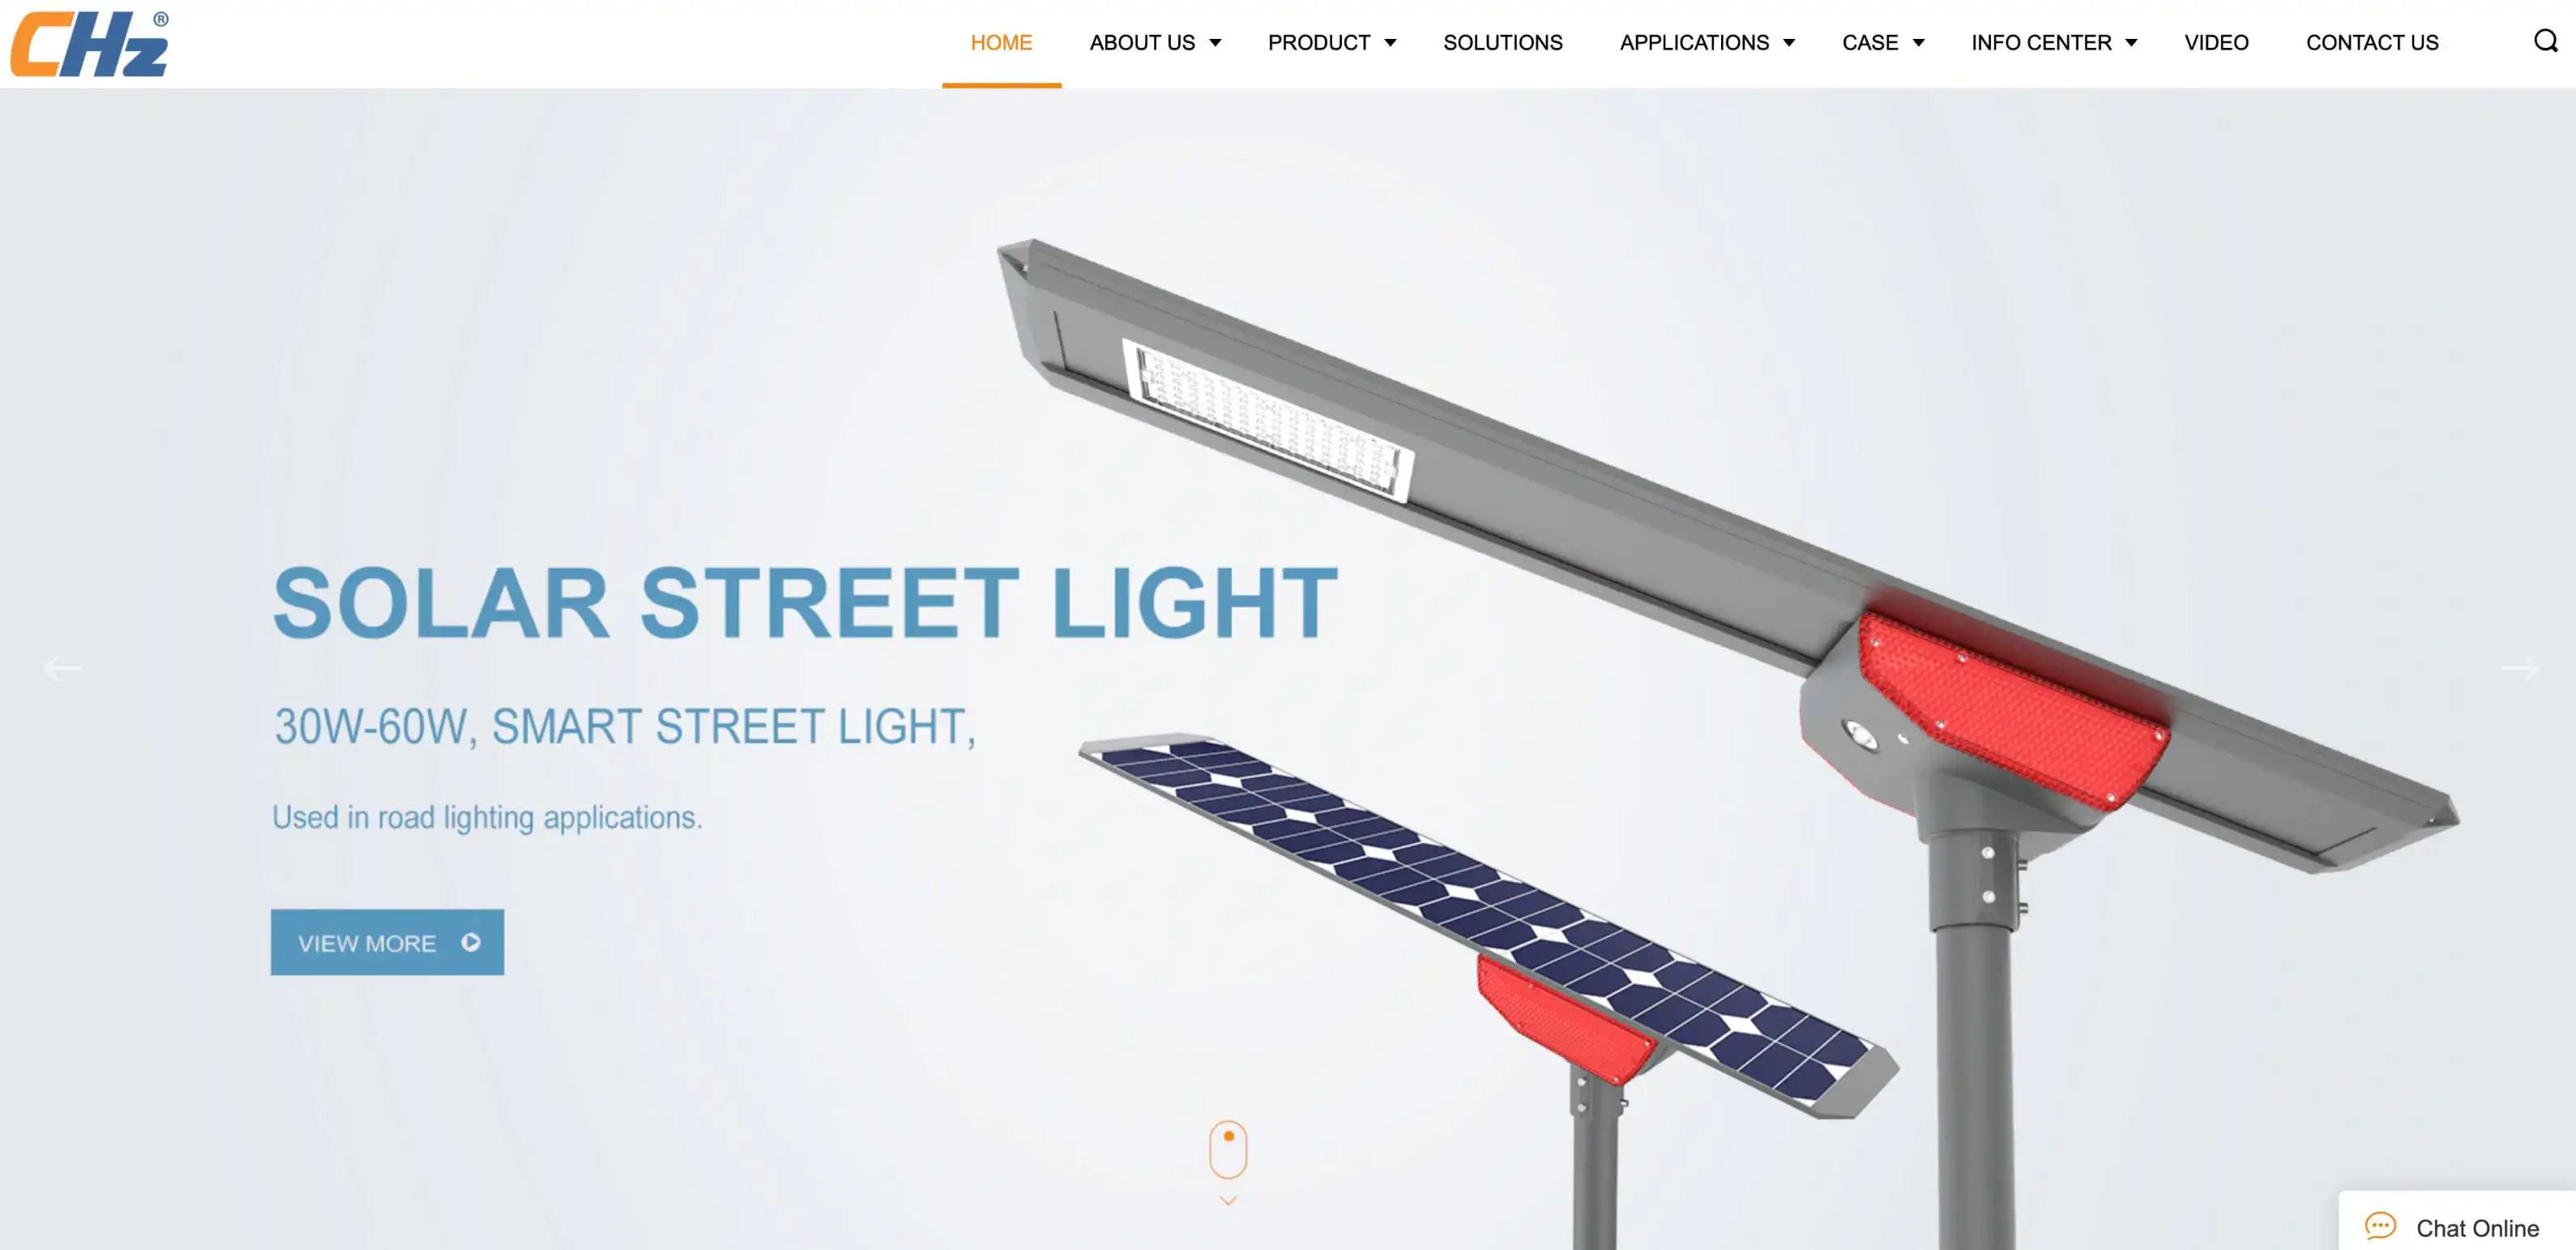 CHZ Lightings solar street light webpage showcasing energy efficient outdoor lighting solutions